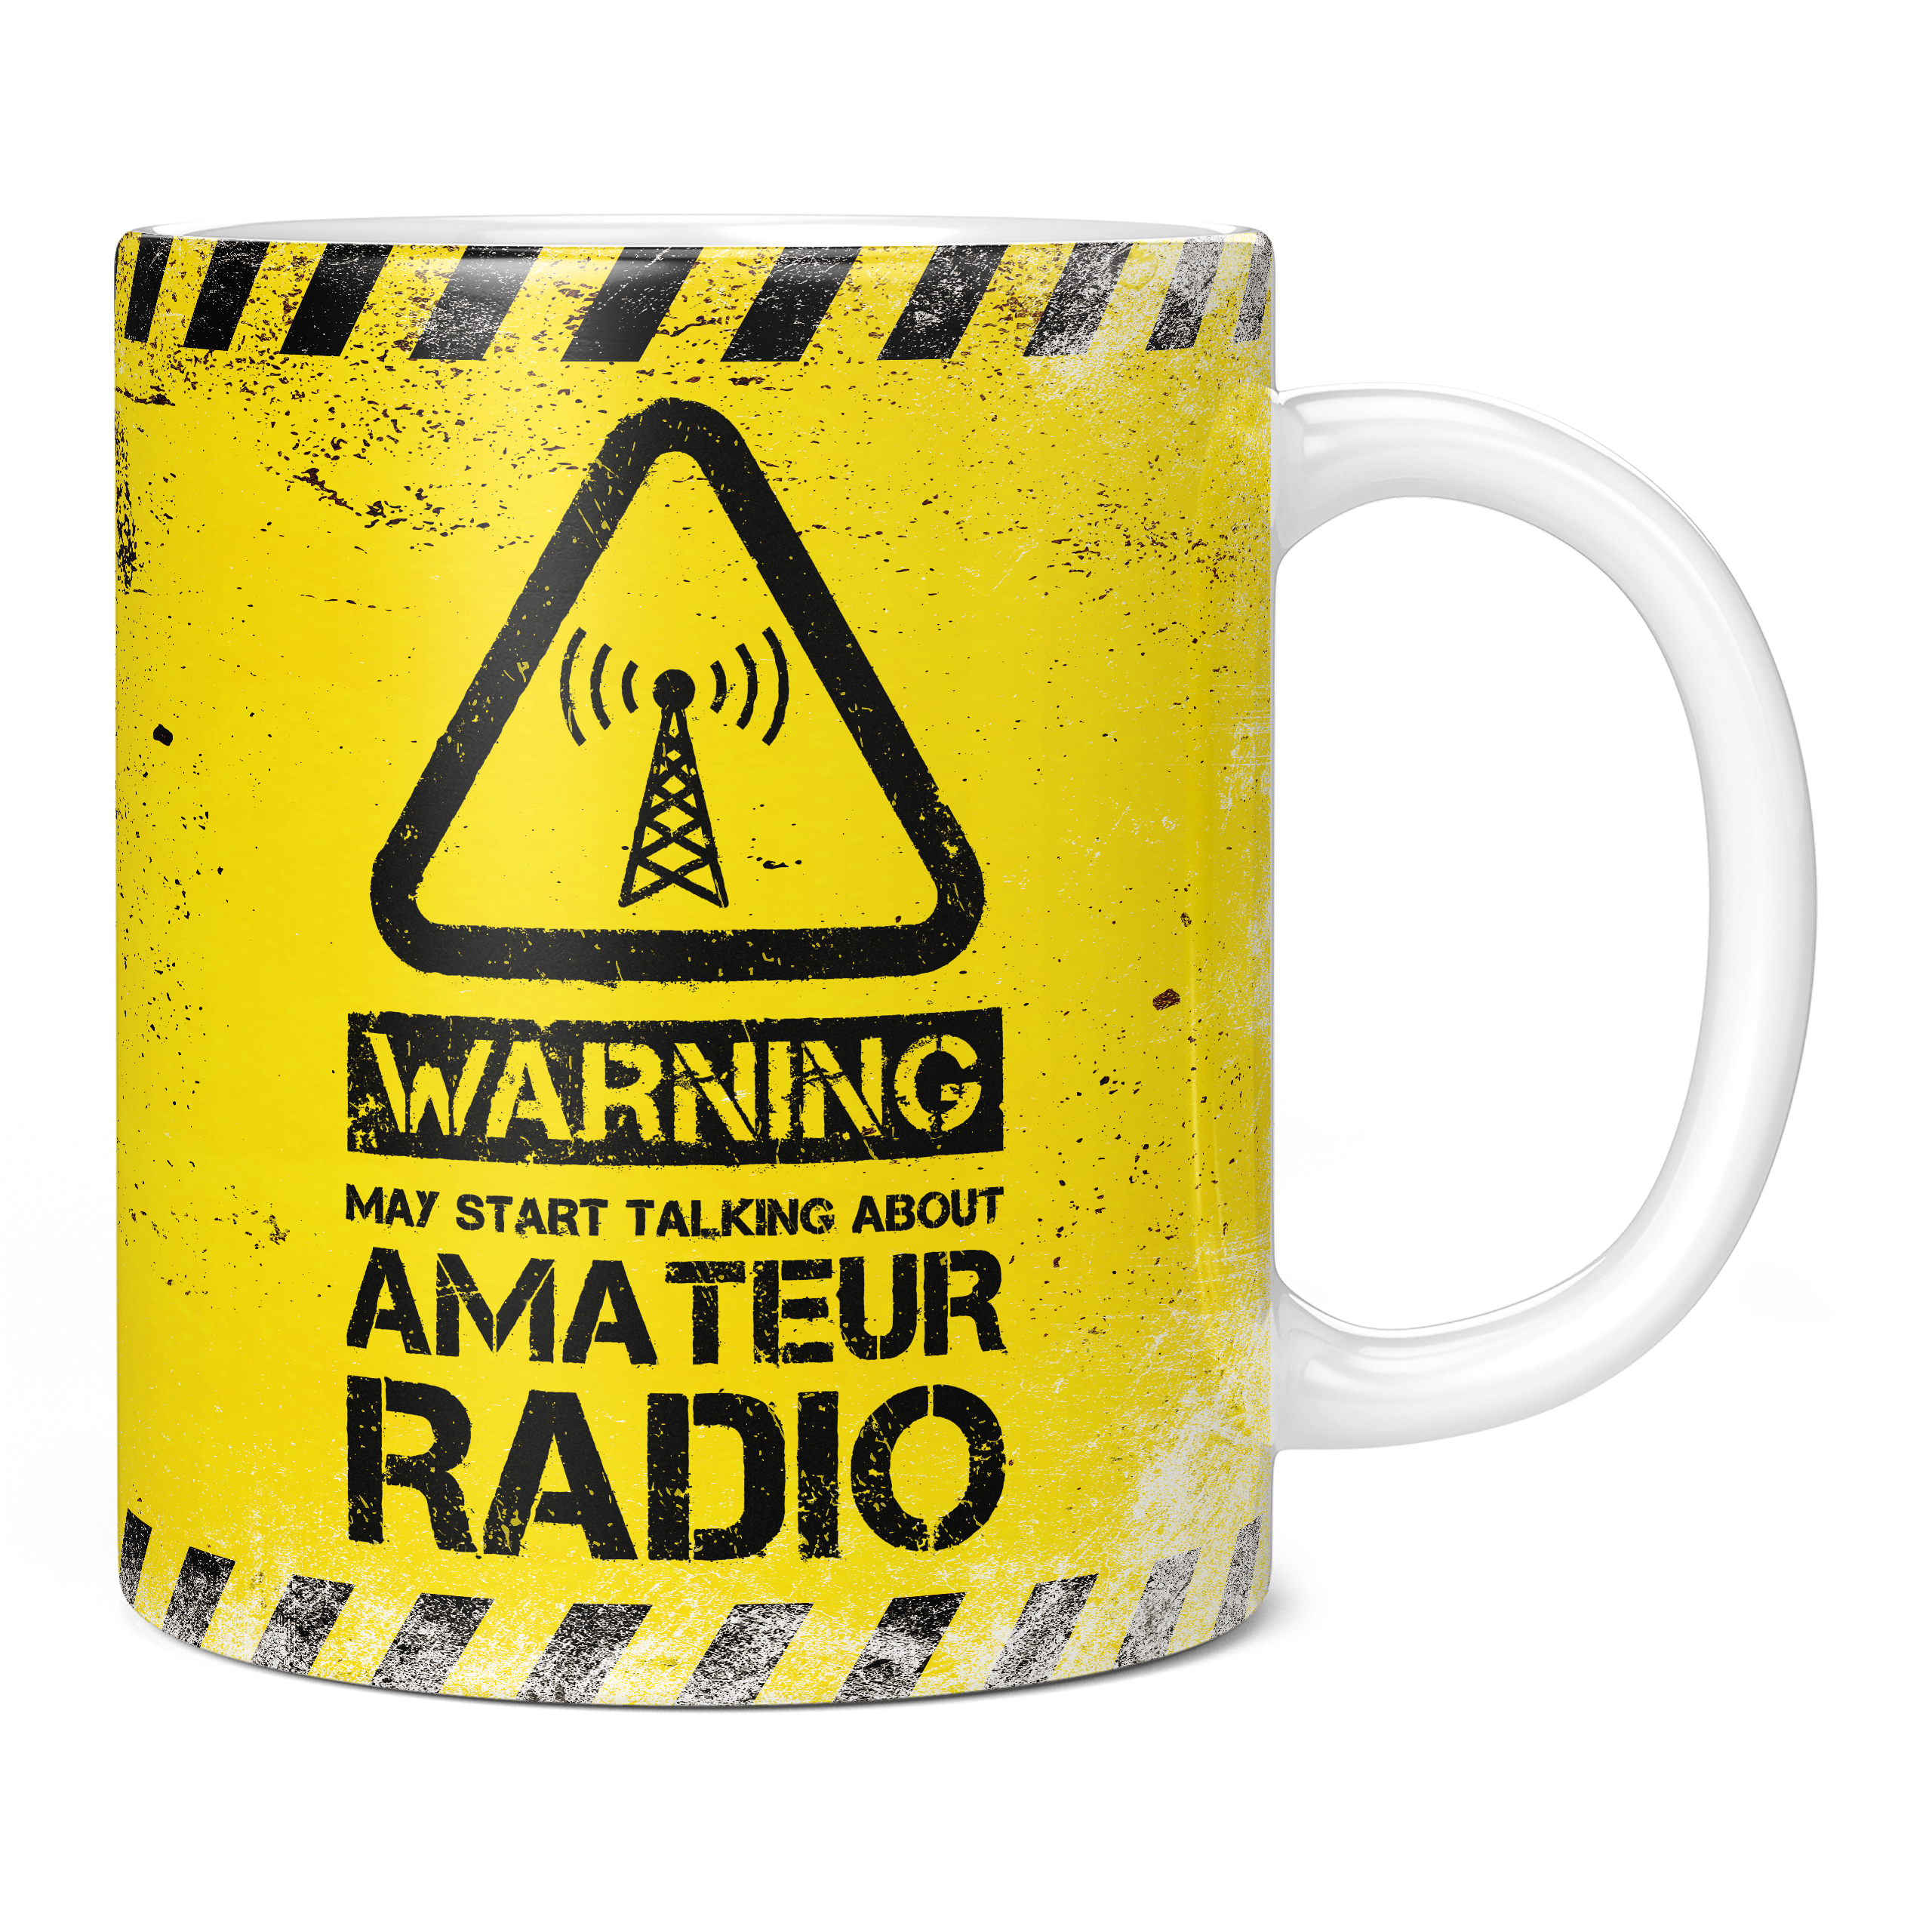 WARNING MAY START TALKING ABOUT AMATEUR RADIO 11oz NOVELTY MUG Mugs